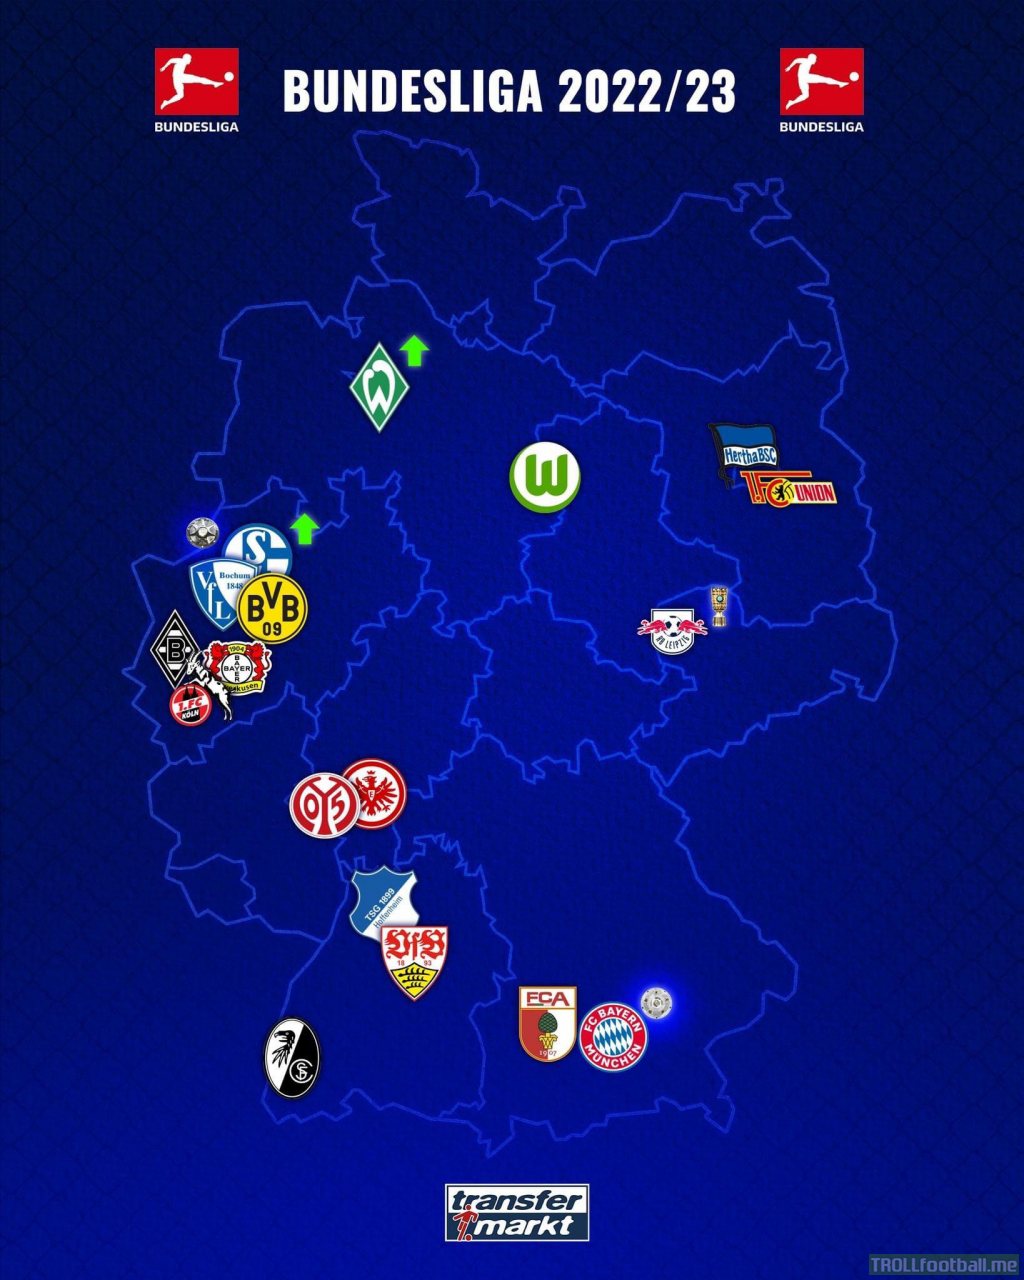 Location of the Bundesliga clubs of the 2022/2023 season